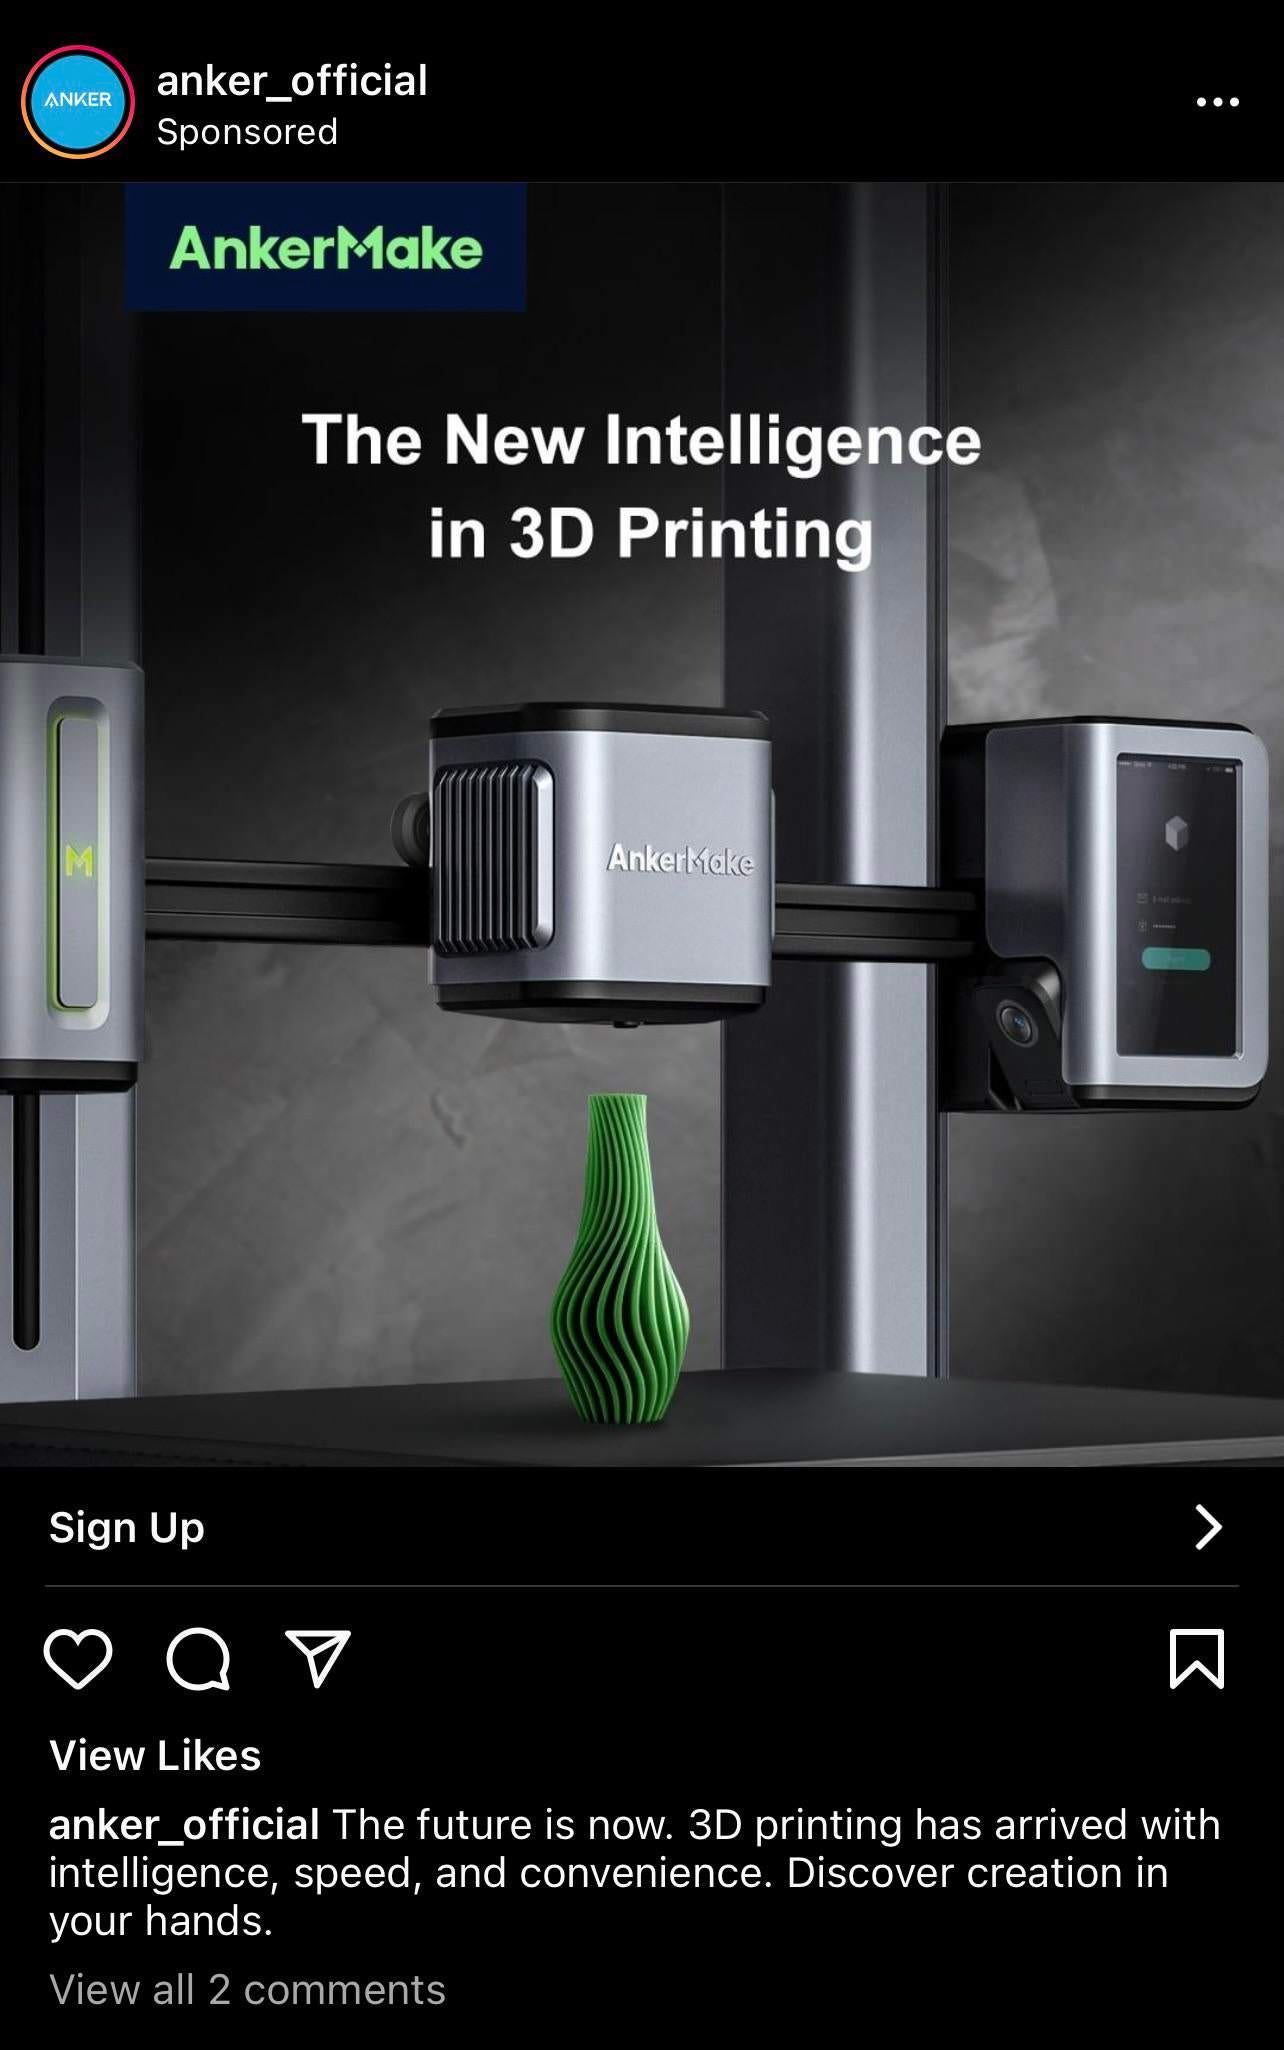 Anker公式Instagramアカウントにて配信されている広告。AnkerMakeのロゴが付いた3Dプリンターがプリントをしている様子